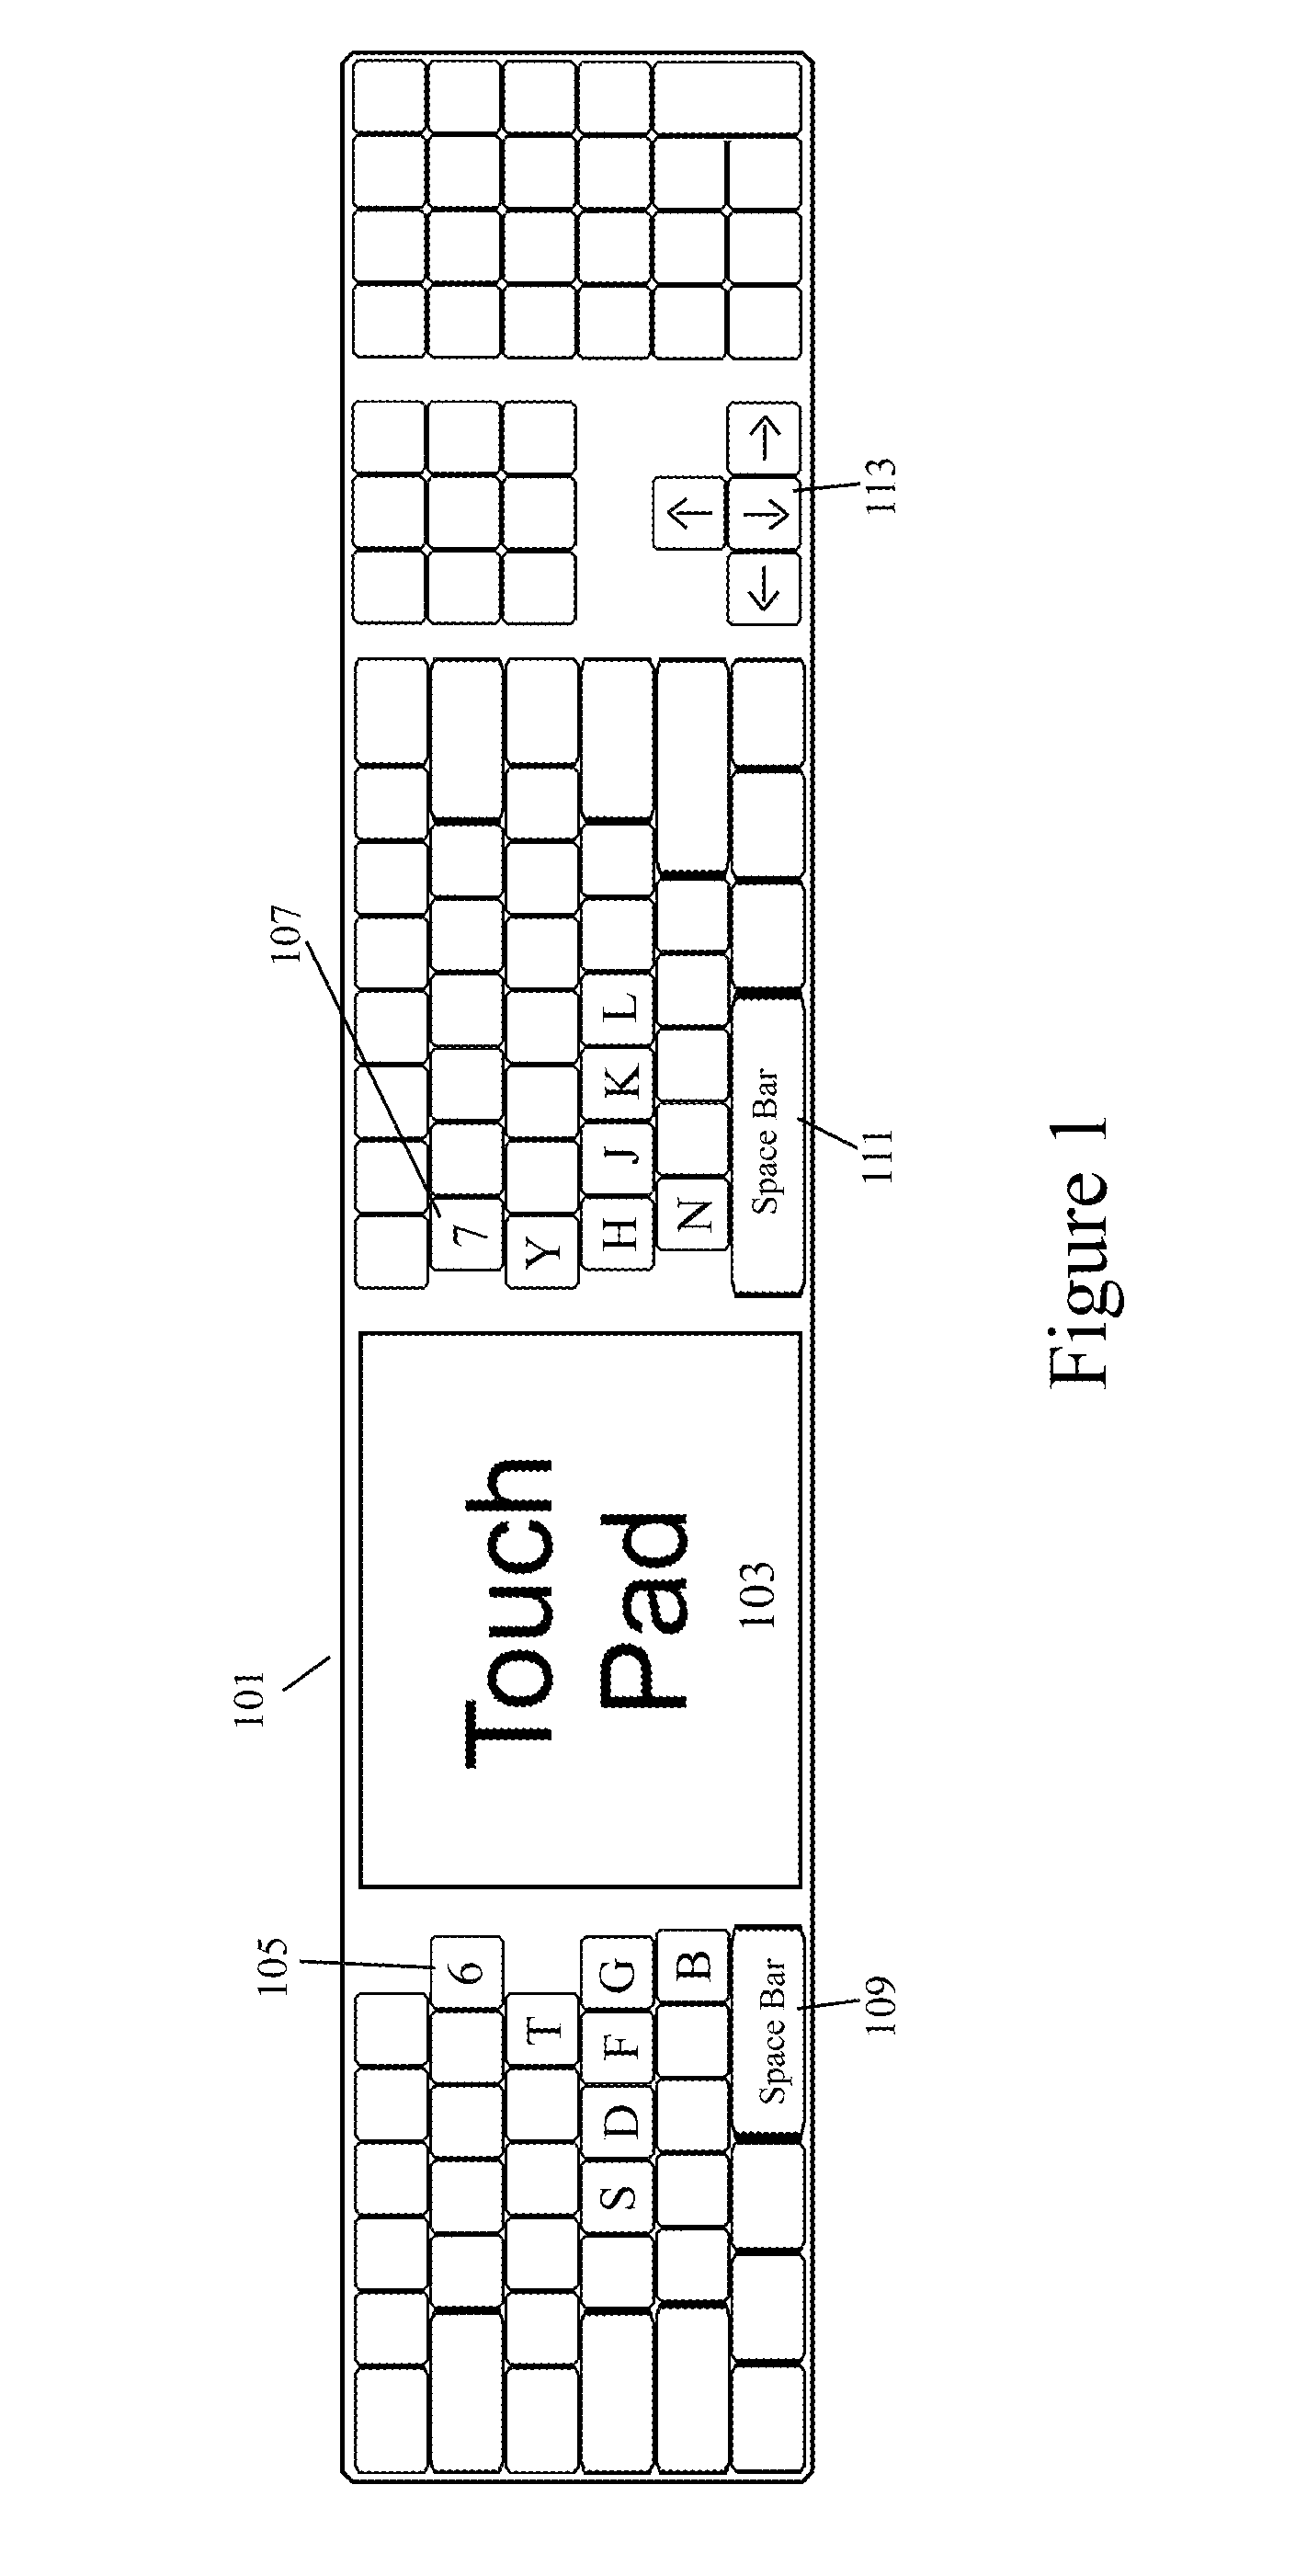 Computer keyboard having an enhanced ergonomic and intuitive design